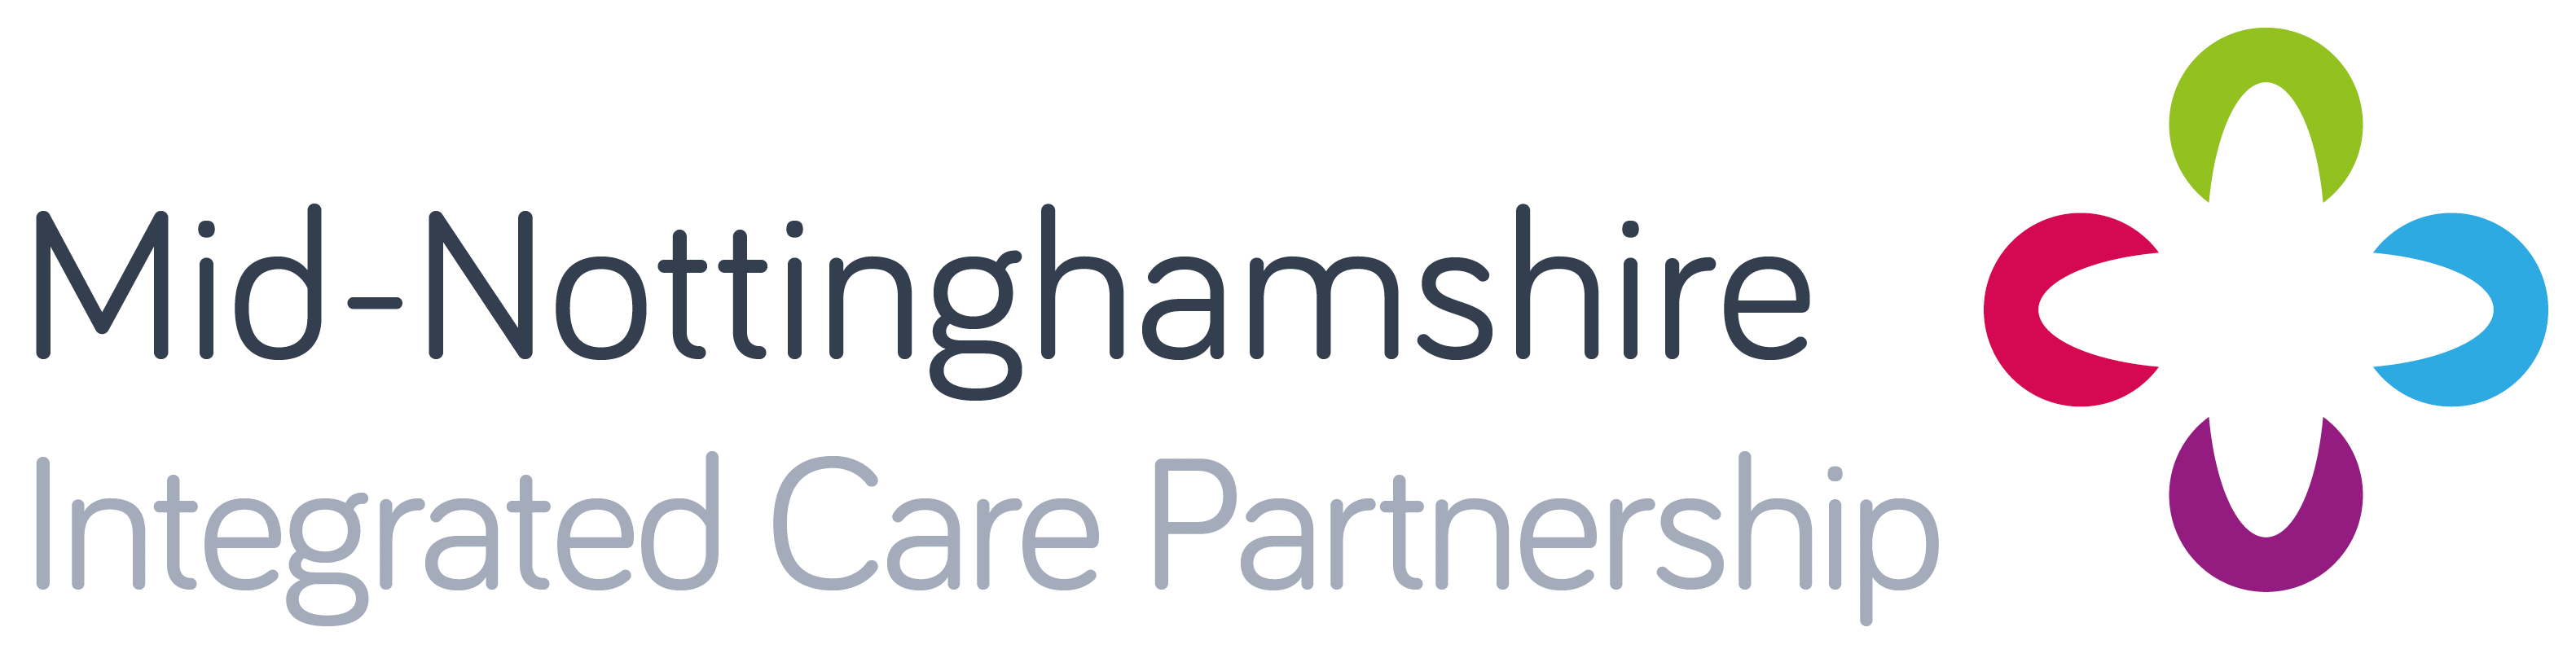 Mid-Nottinghamshire News logo